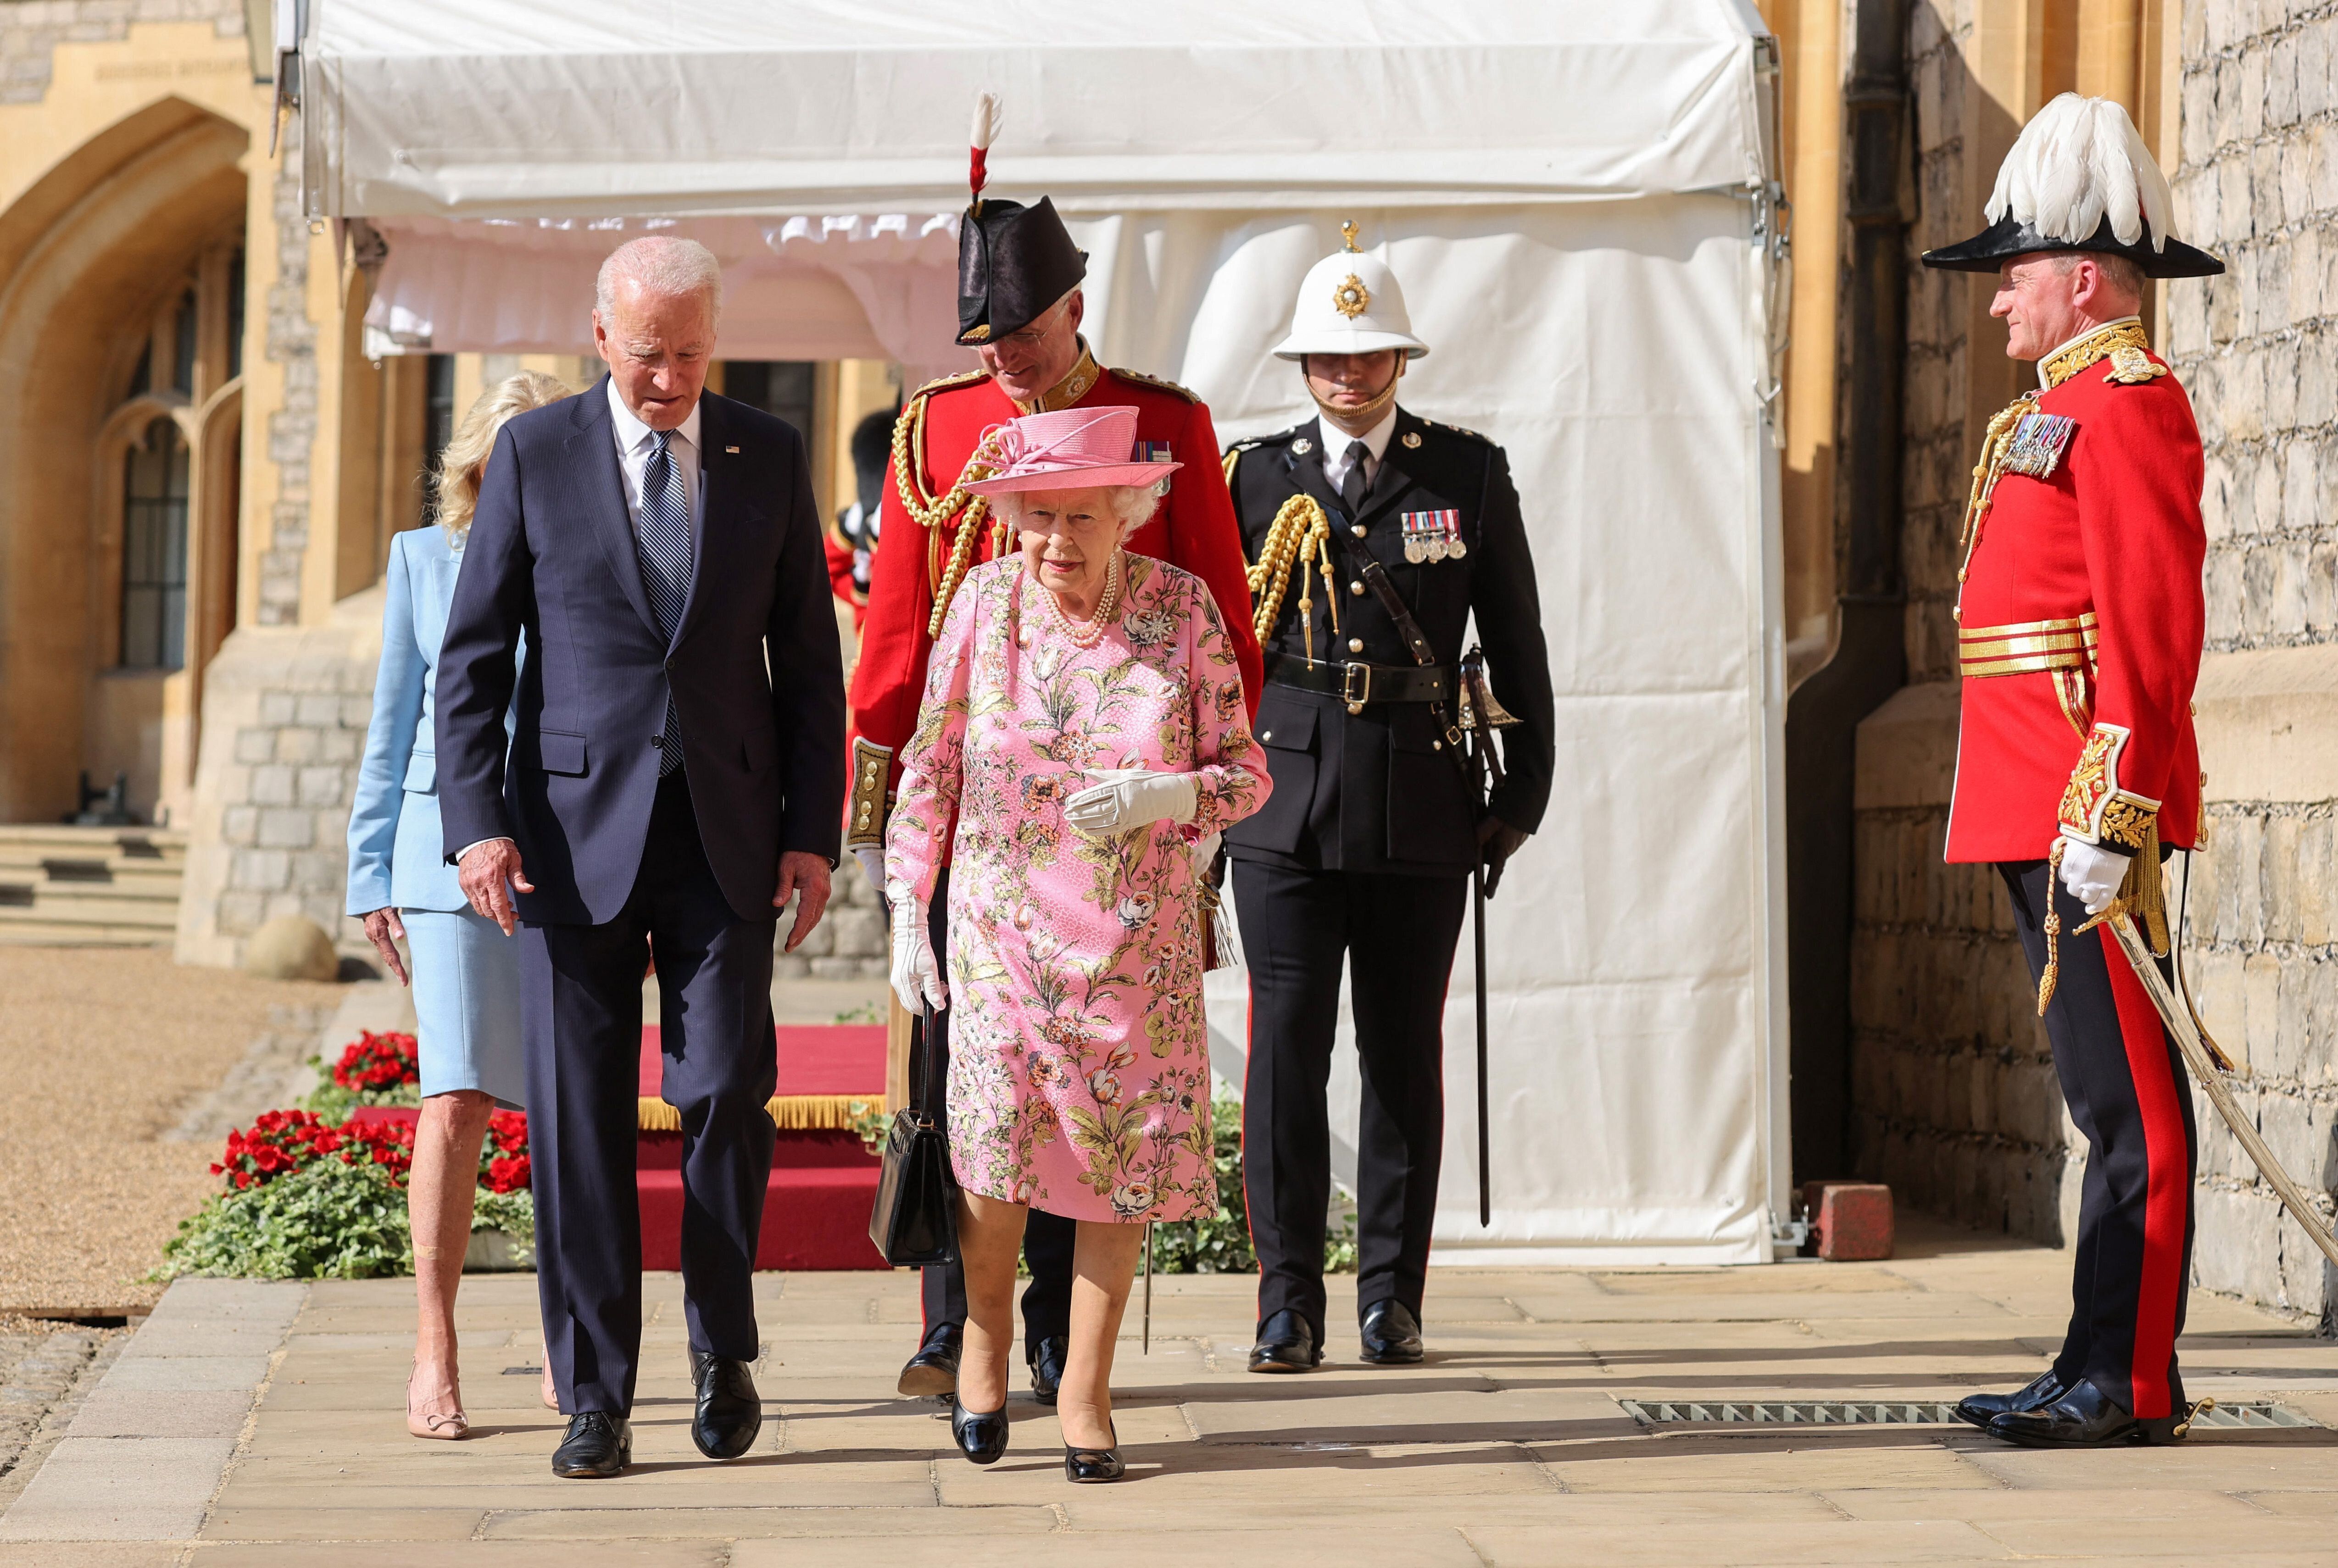 Biden speaks with Queen Elizabeth II during Sunday's visit,, which will include tea.